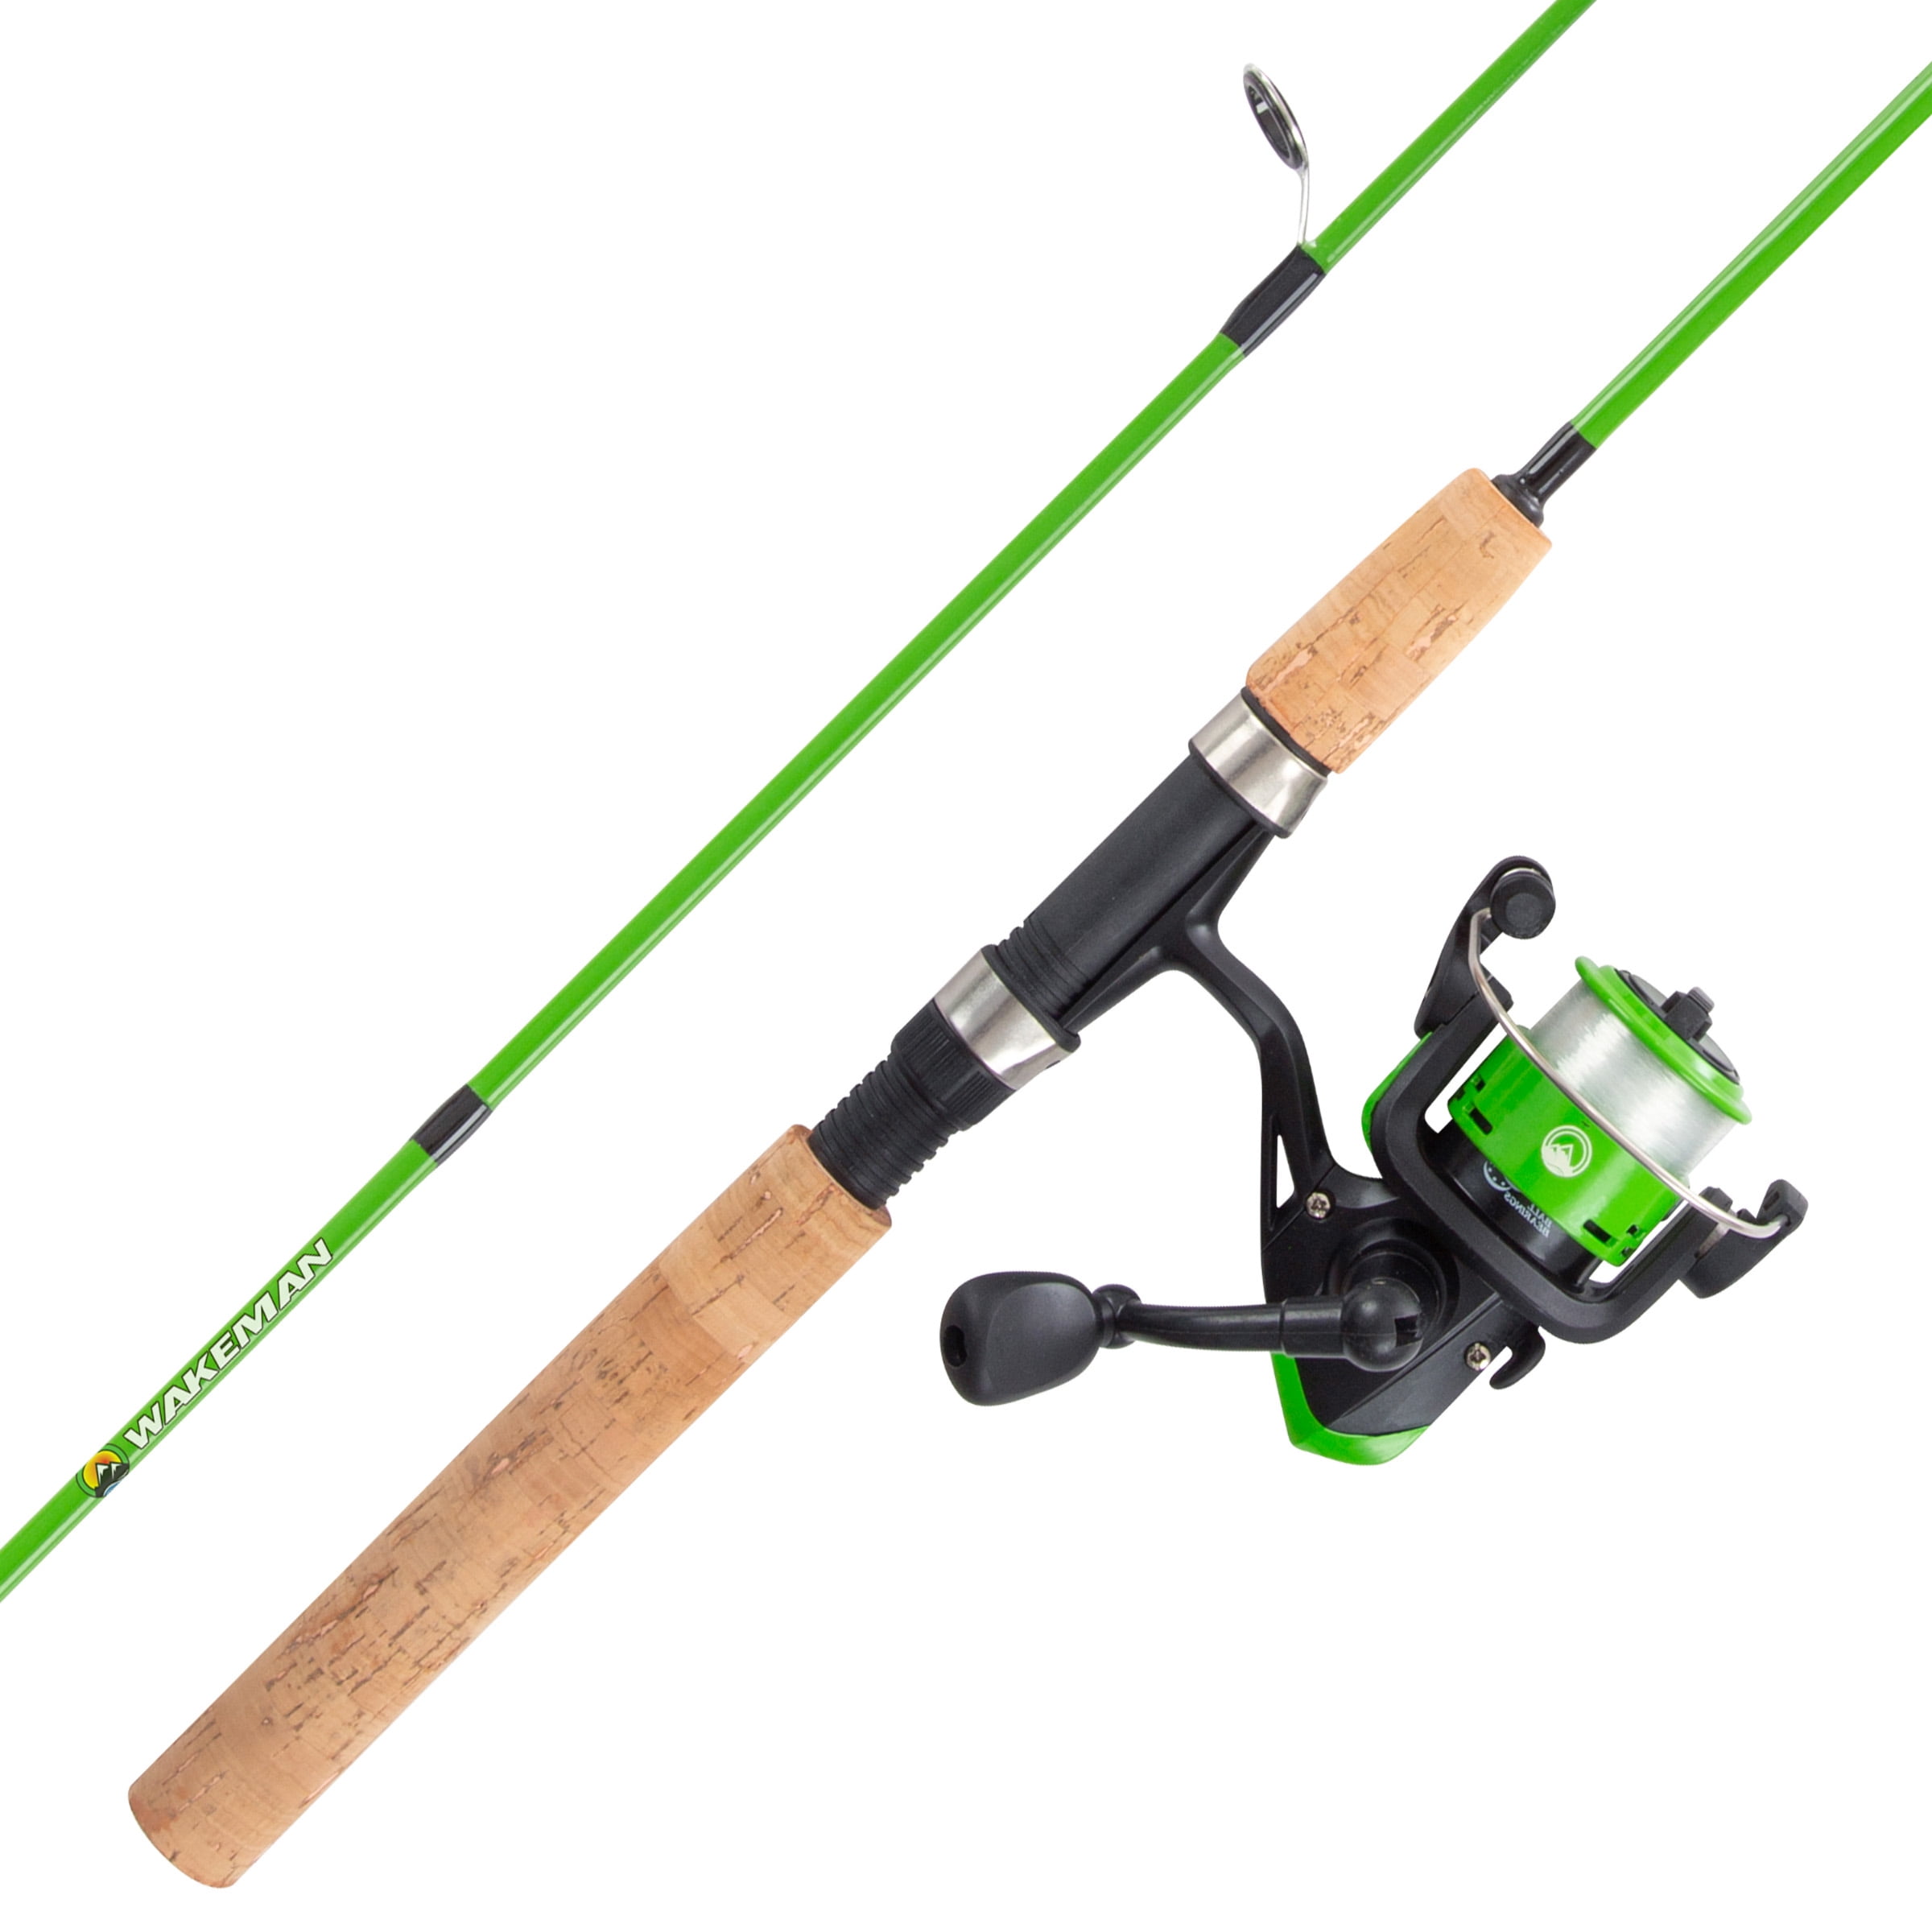 RAD Youth Fishing Rod & Reel Combo-5'2” Fiberglass Pole, Spinning